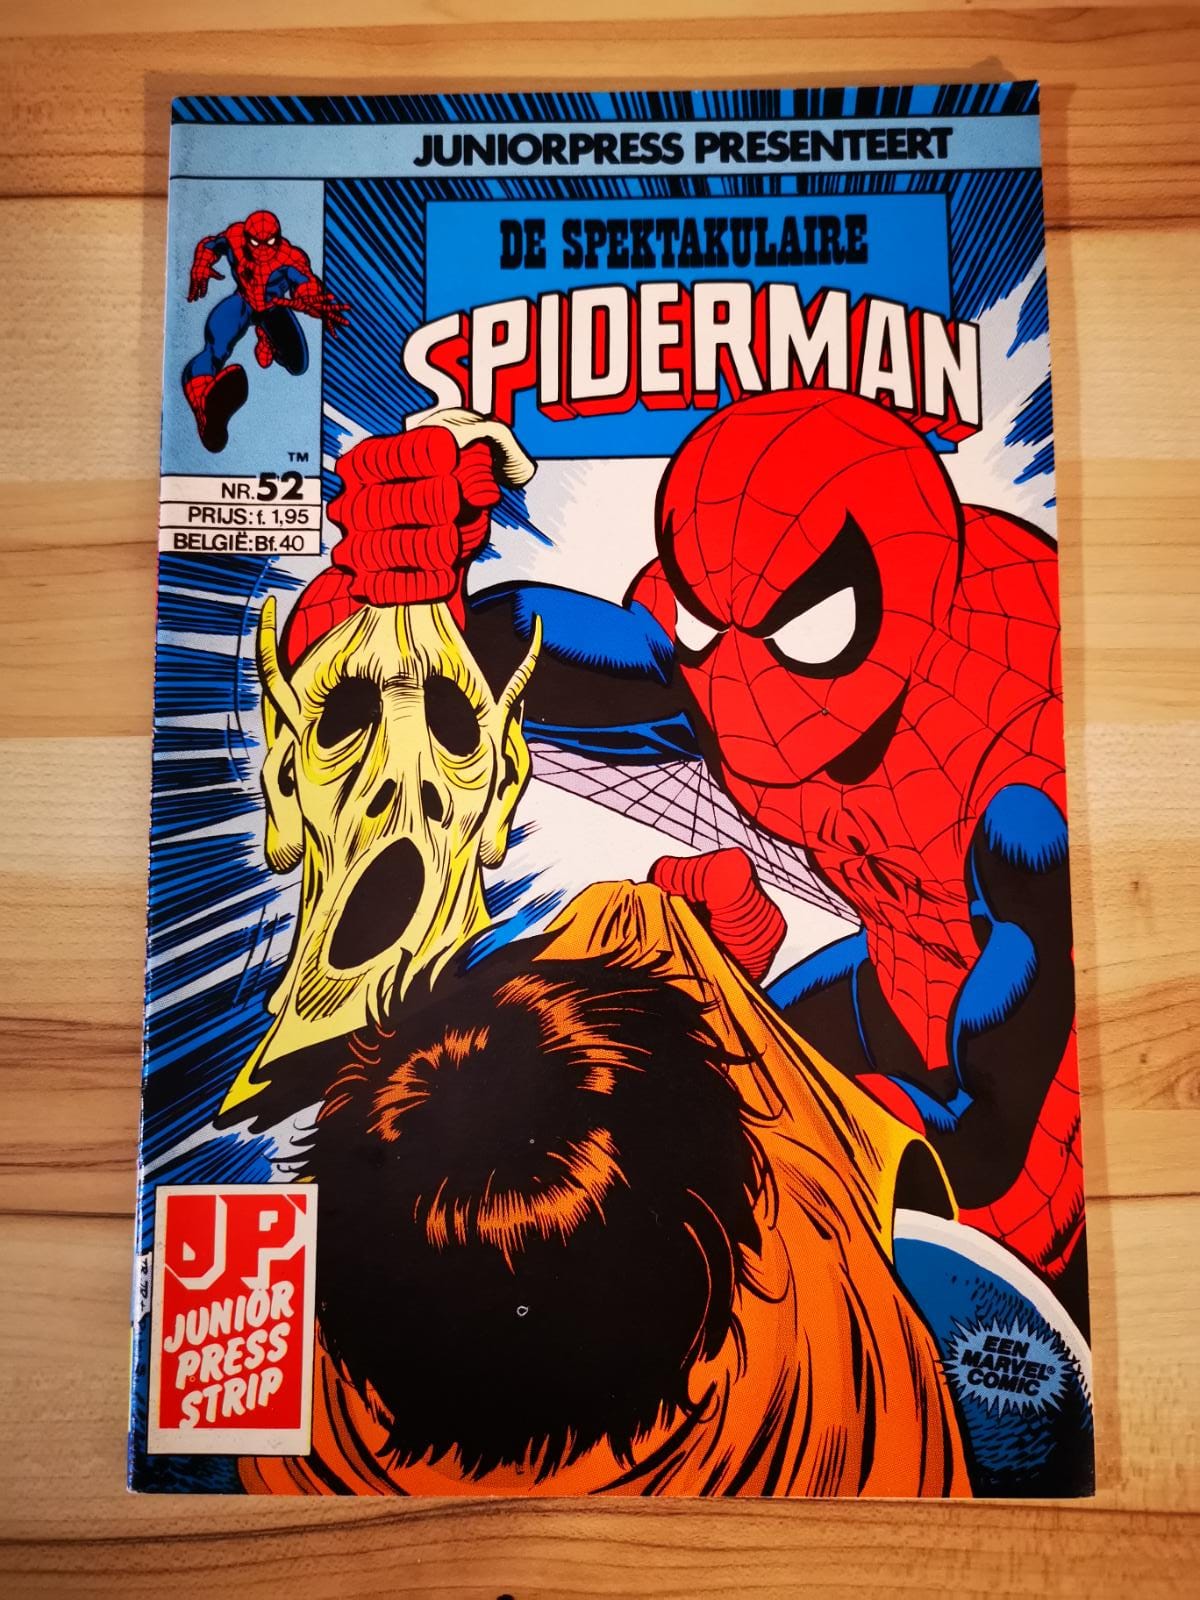 De spektakulaire spiderman #52